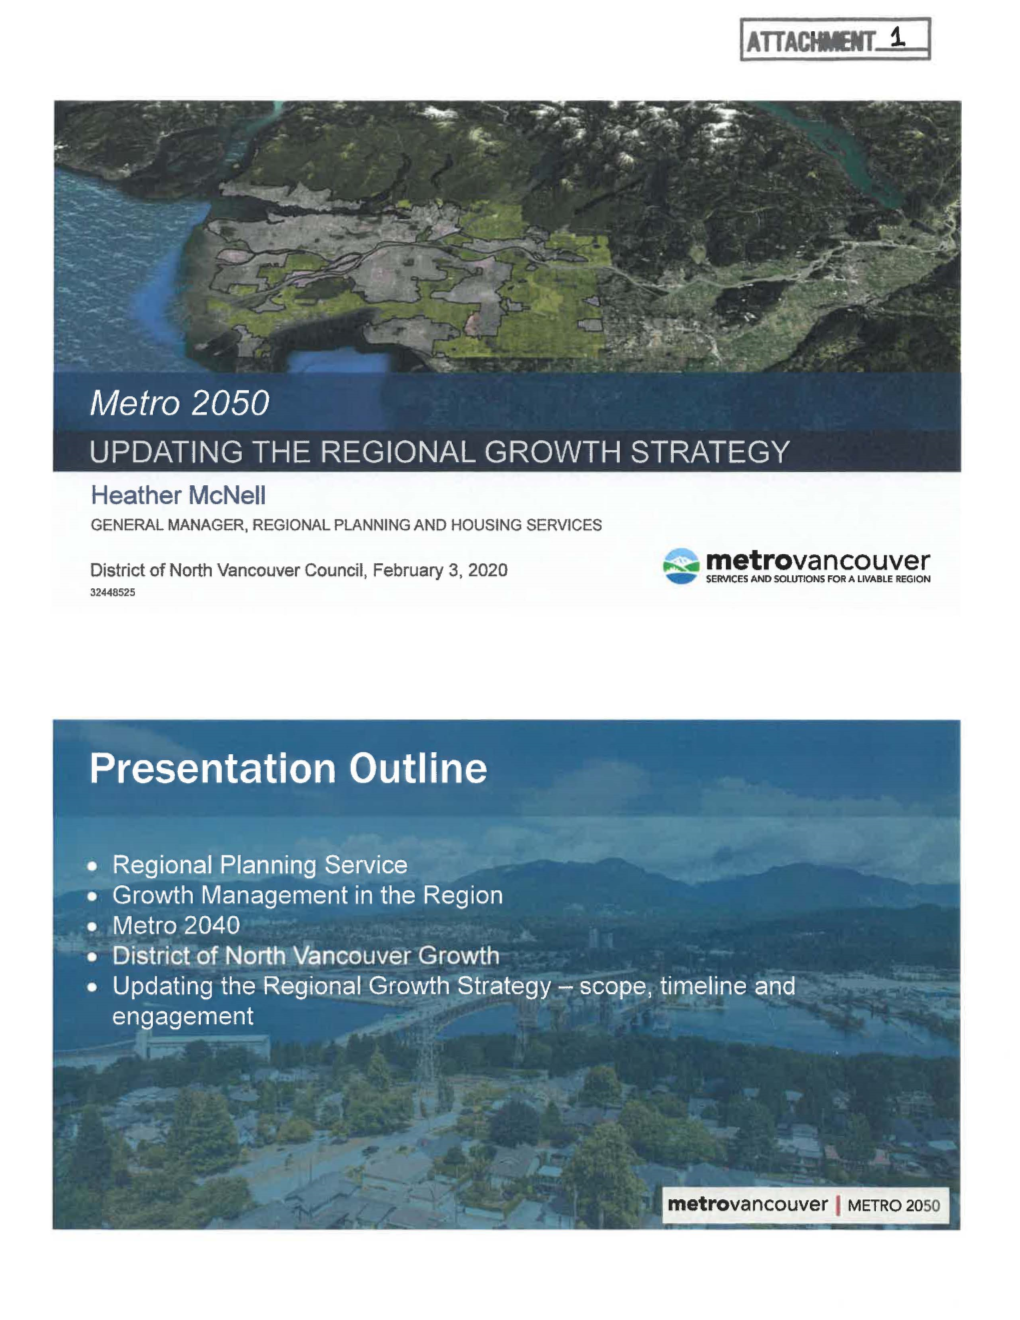 Metro 2050 Presentation from Metro Vancouver